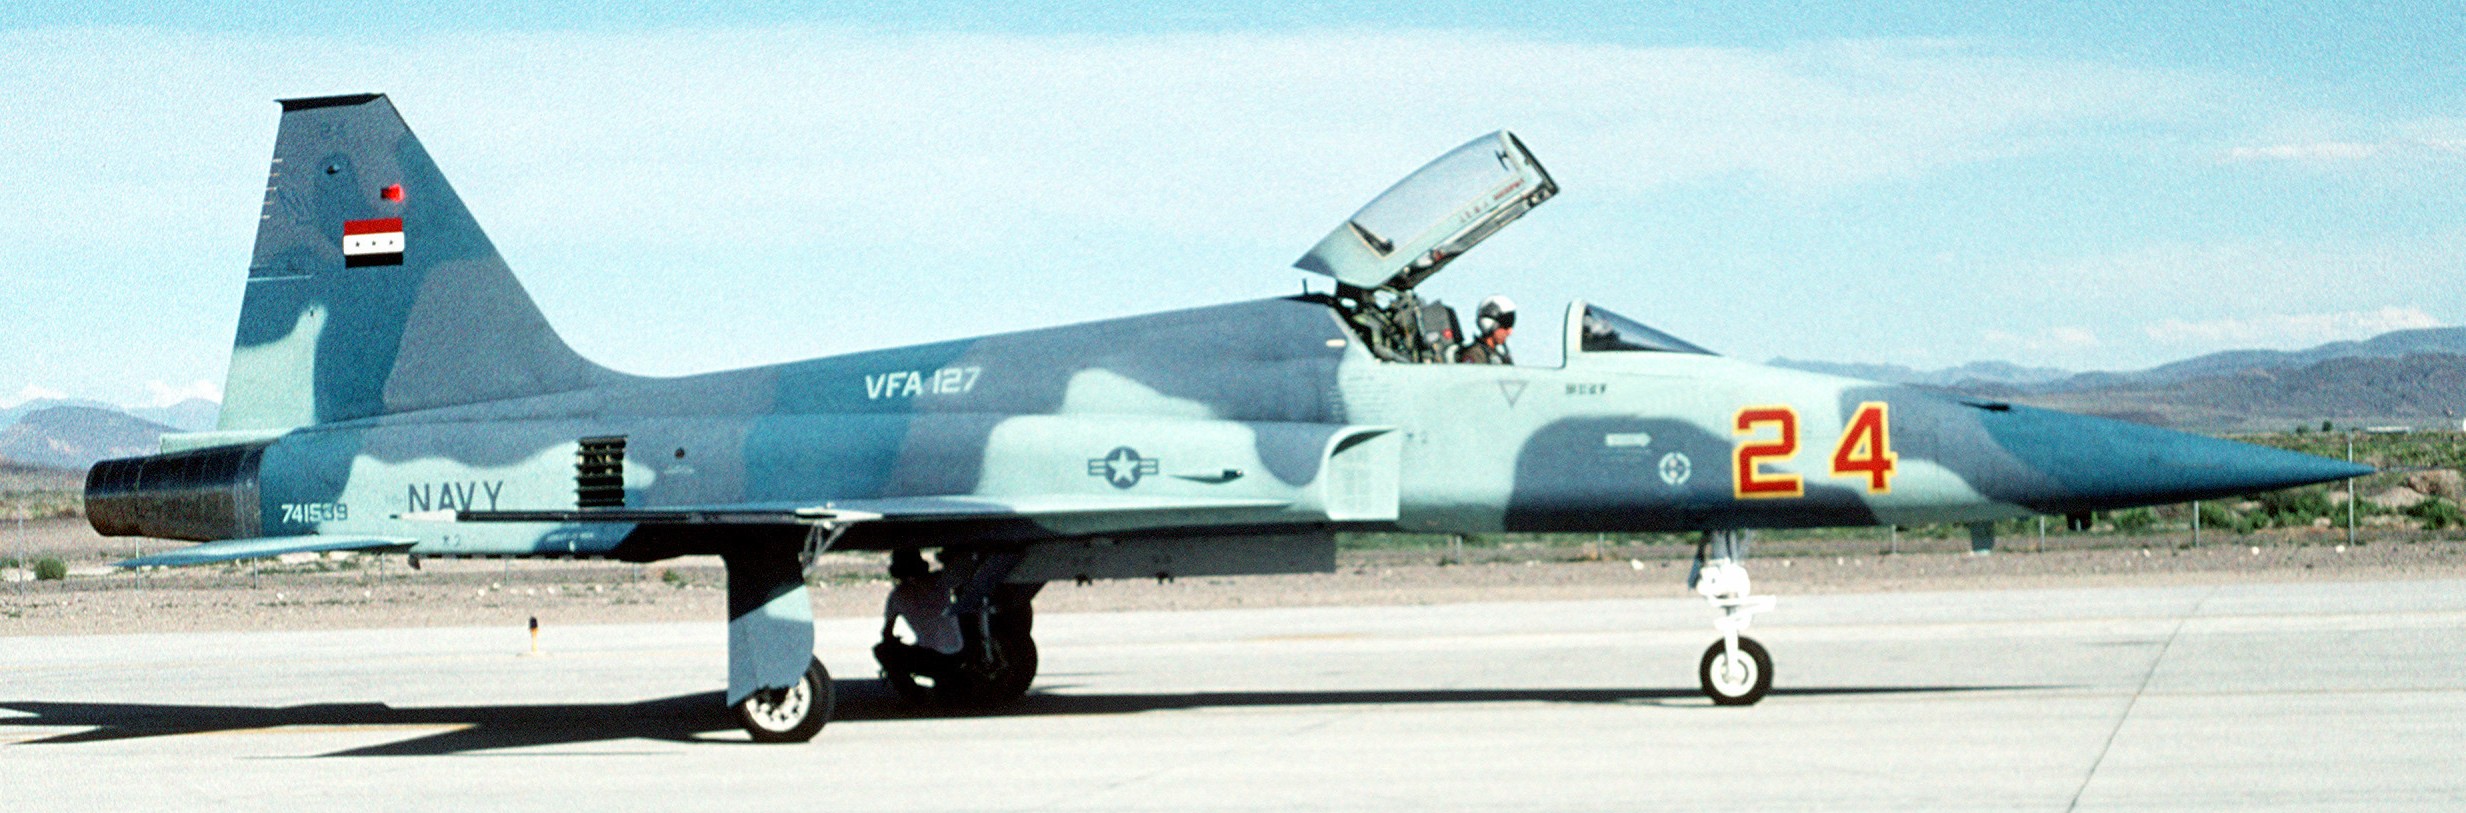 vfa-127 desert bogeys strike fighter squadron f-5e tiger 1993 23